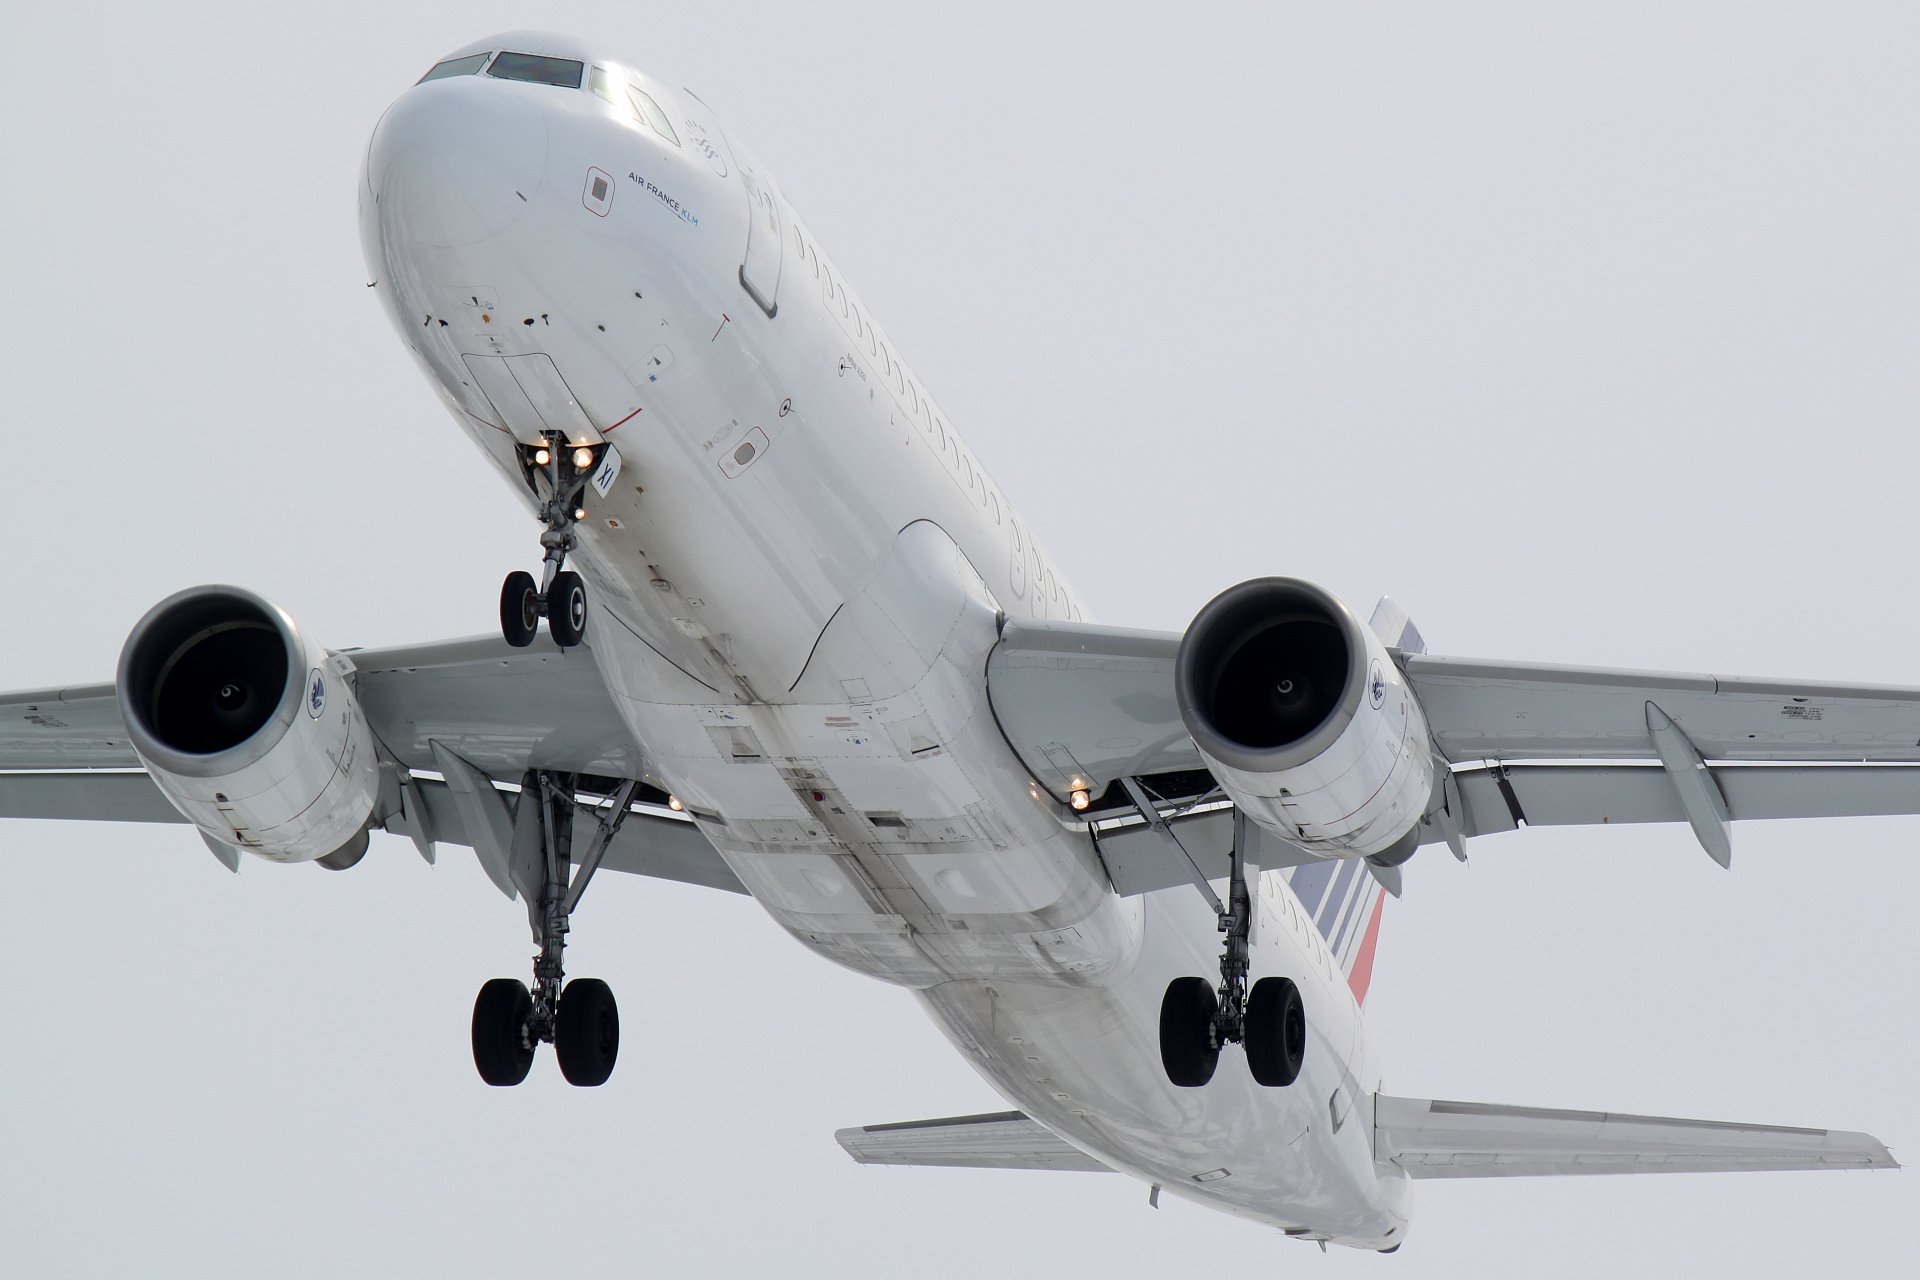 F-GKXI (Aircraft » EPWA Spotting » Airbus A320-200 » Air France)